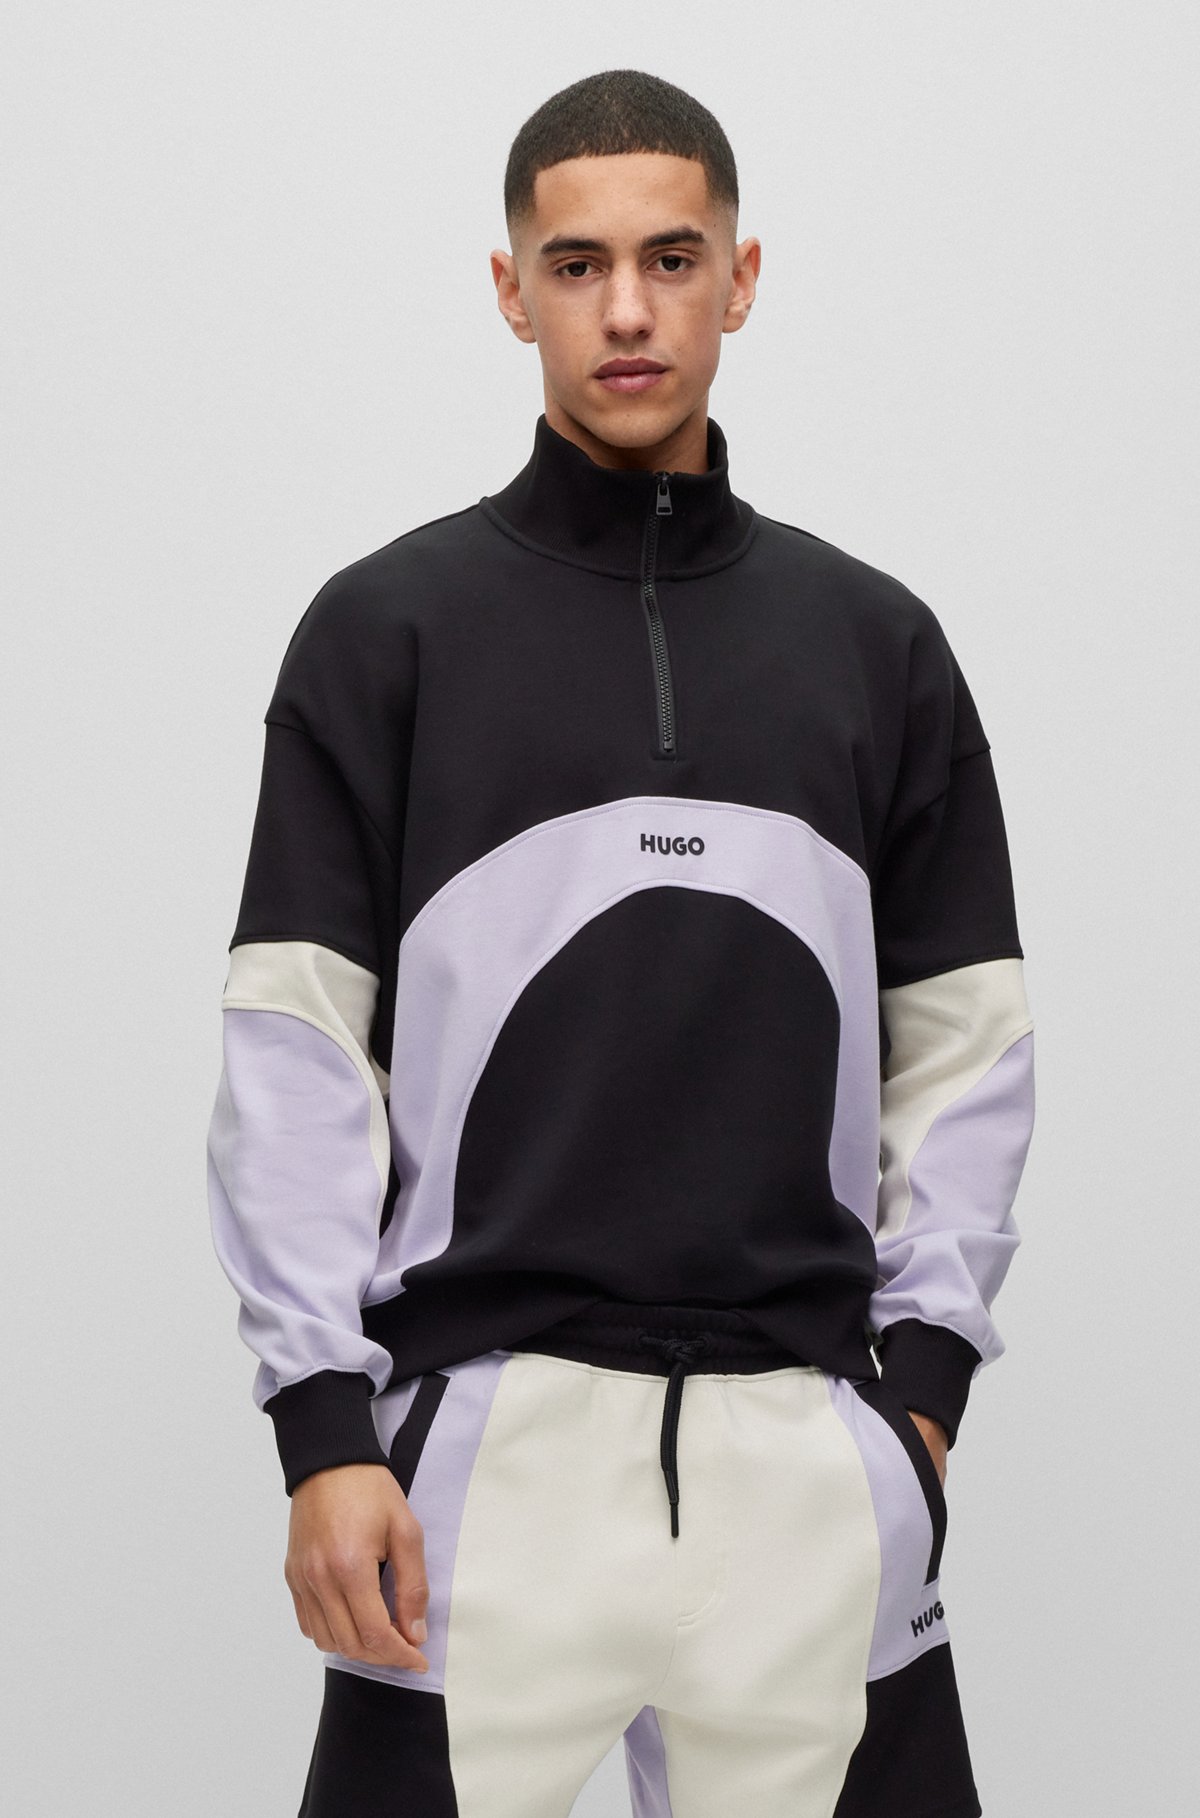 Interlock-cotton zip-neck sweatshirt with color-blocking, Black